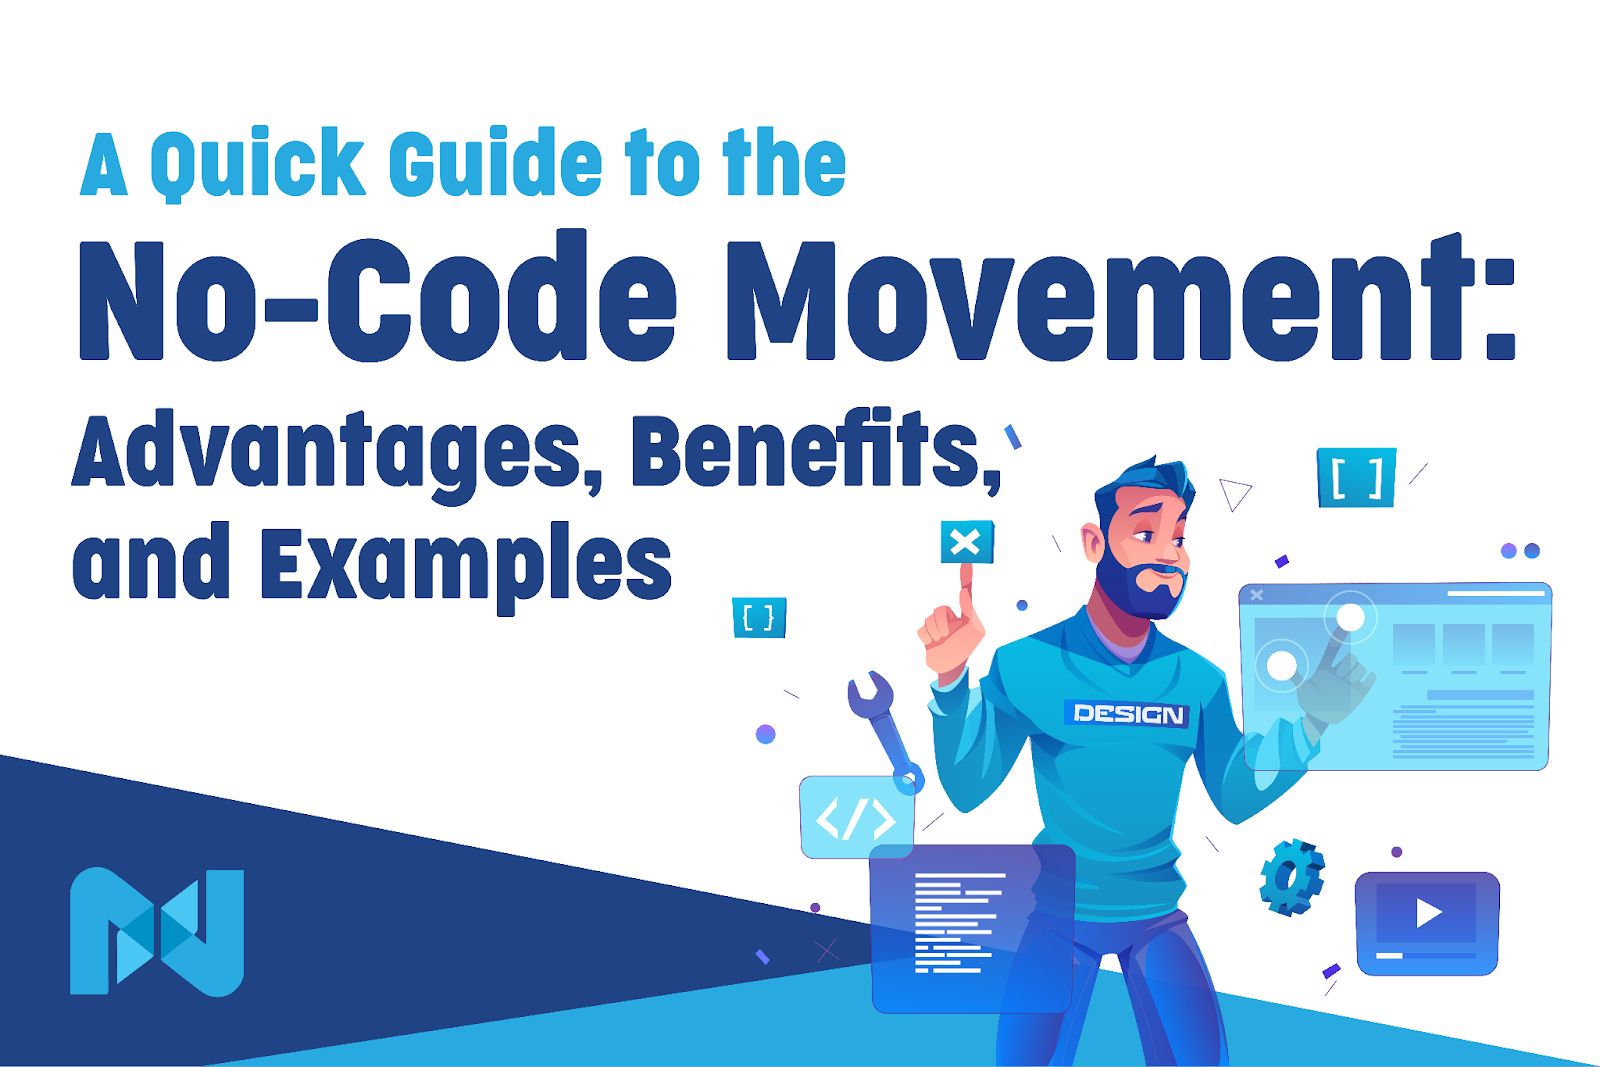 The No-Code Movement: Benefits and Drawbacks.